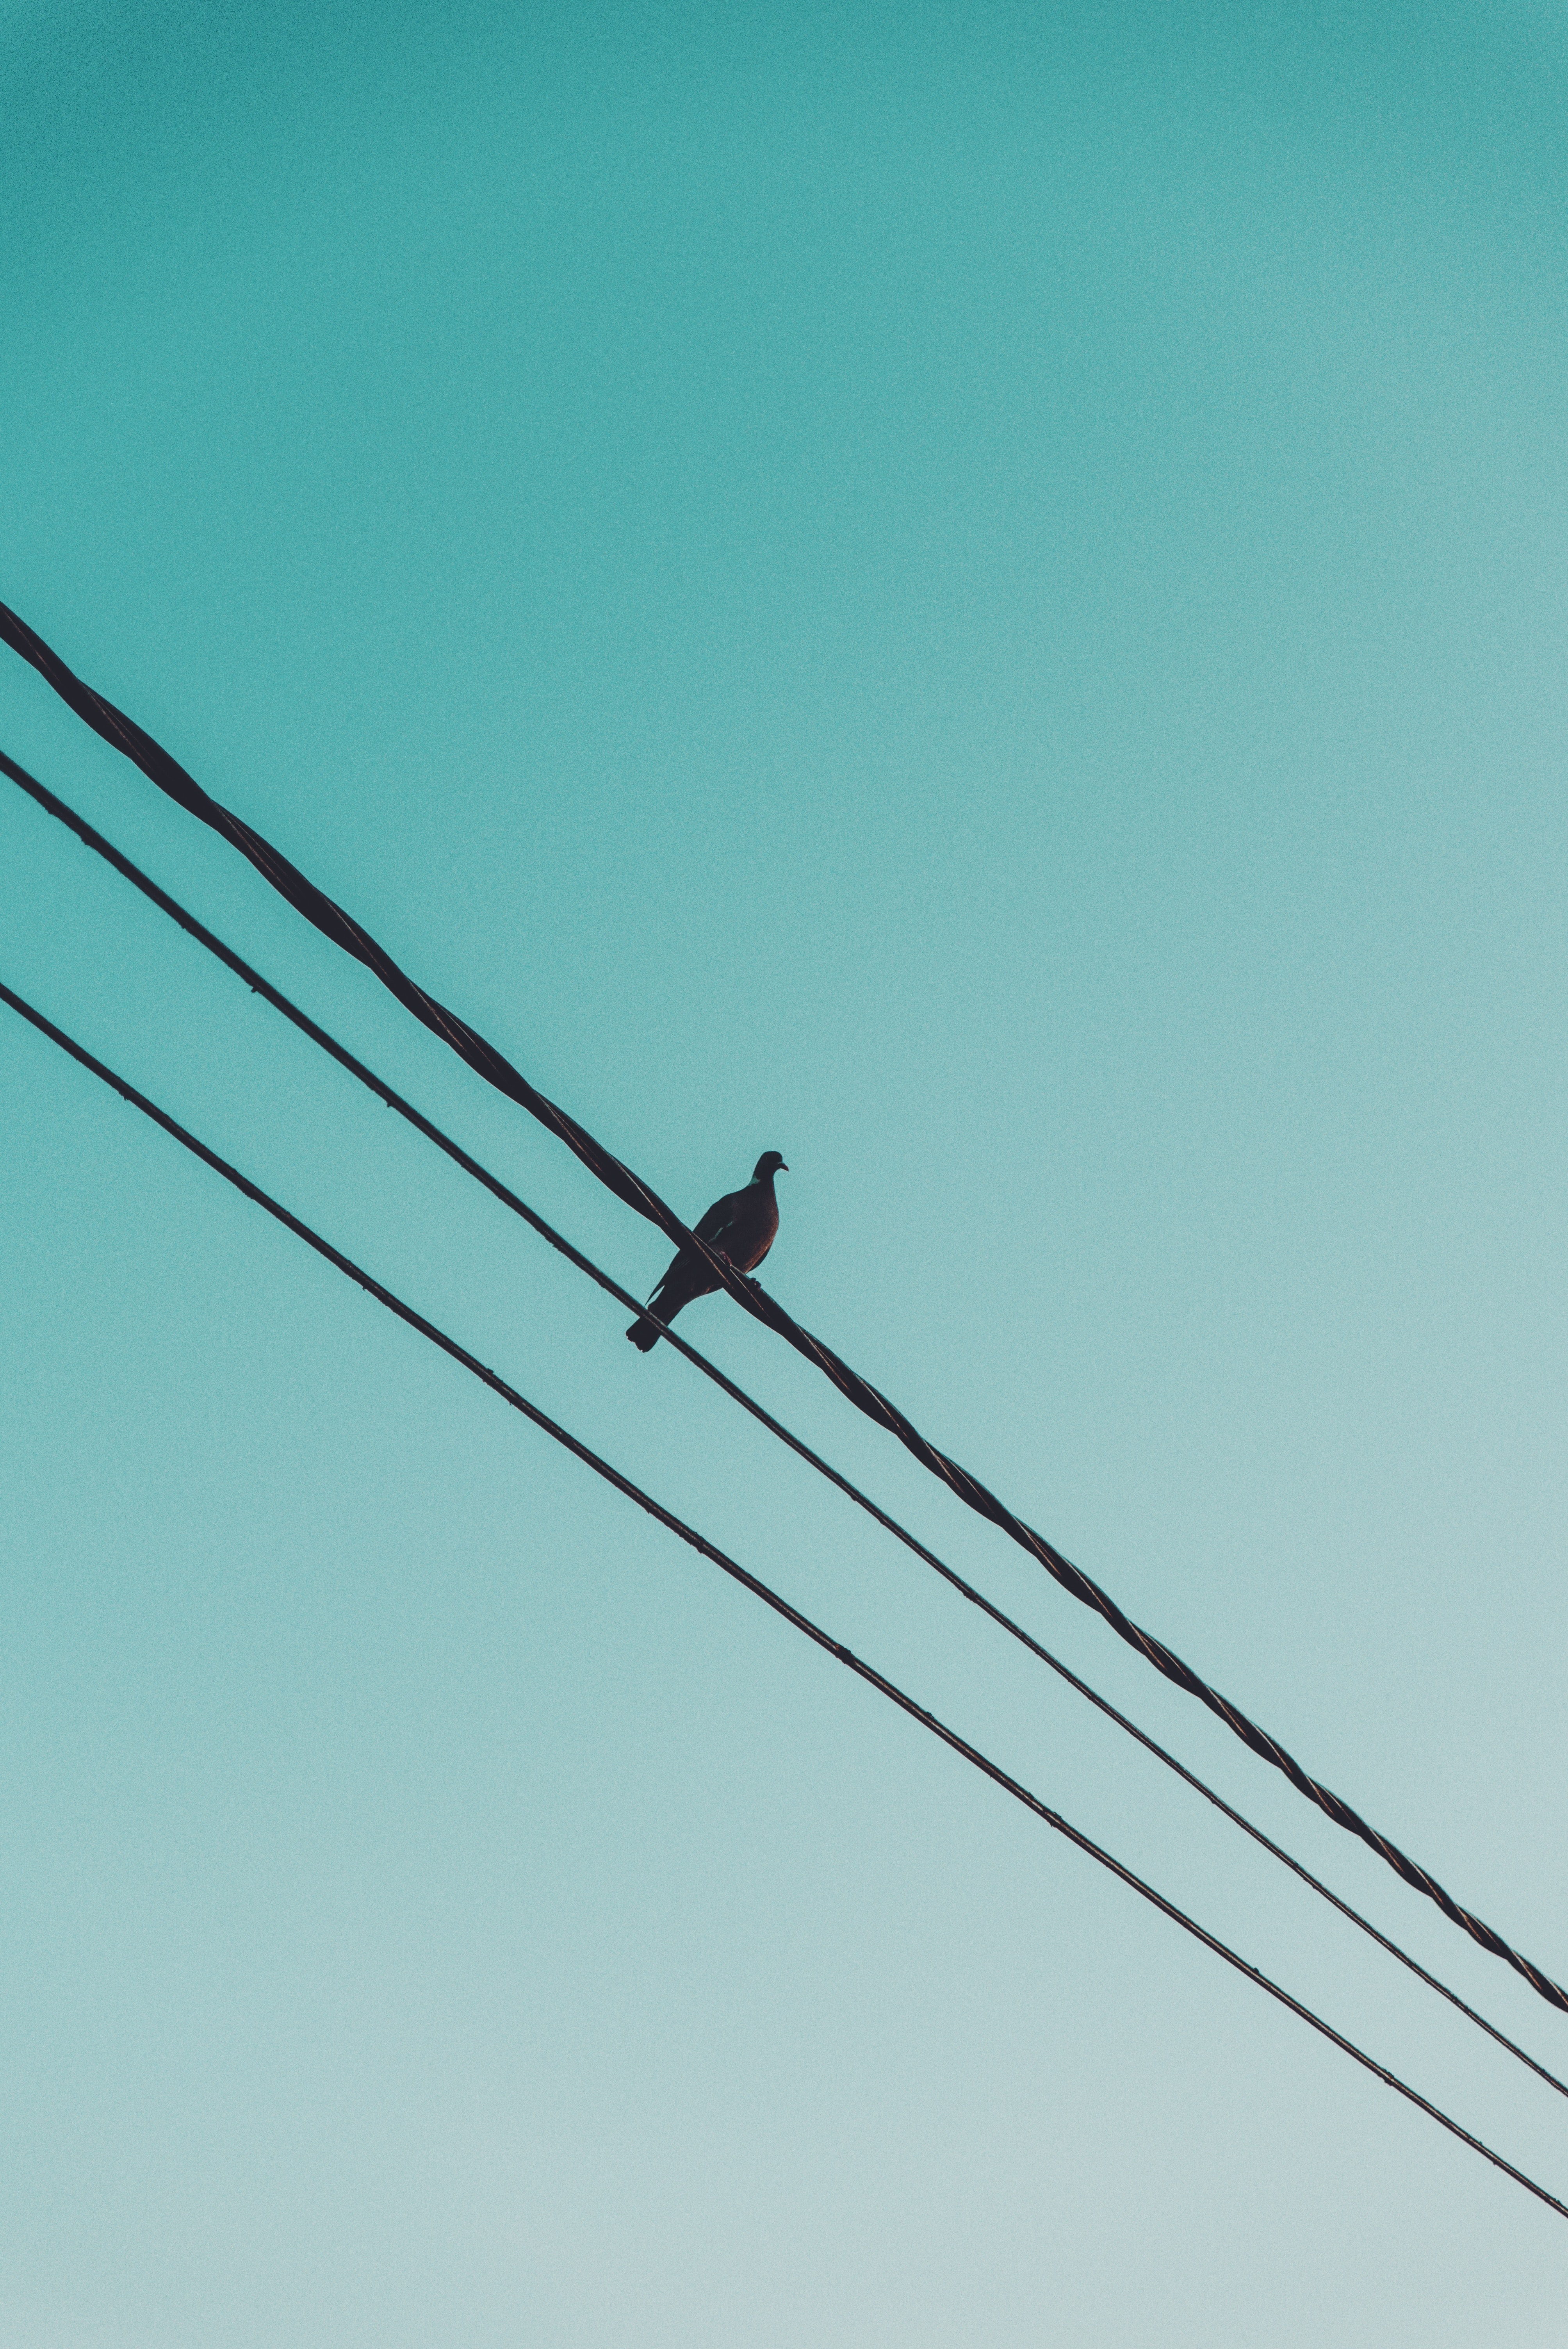 animals, sky, dove, wires, wire